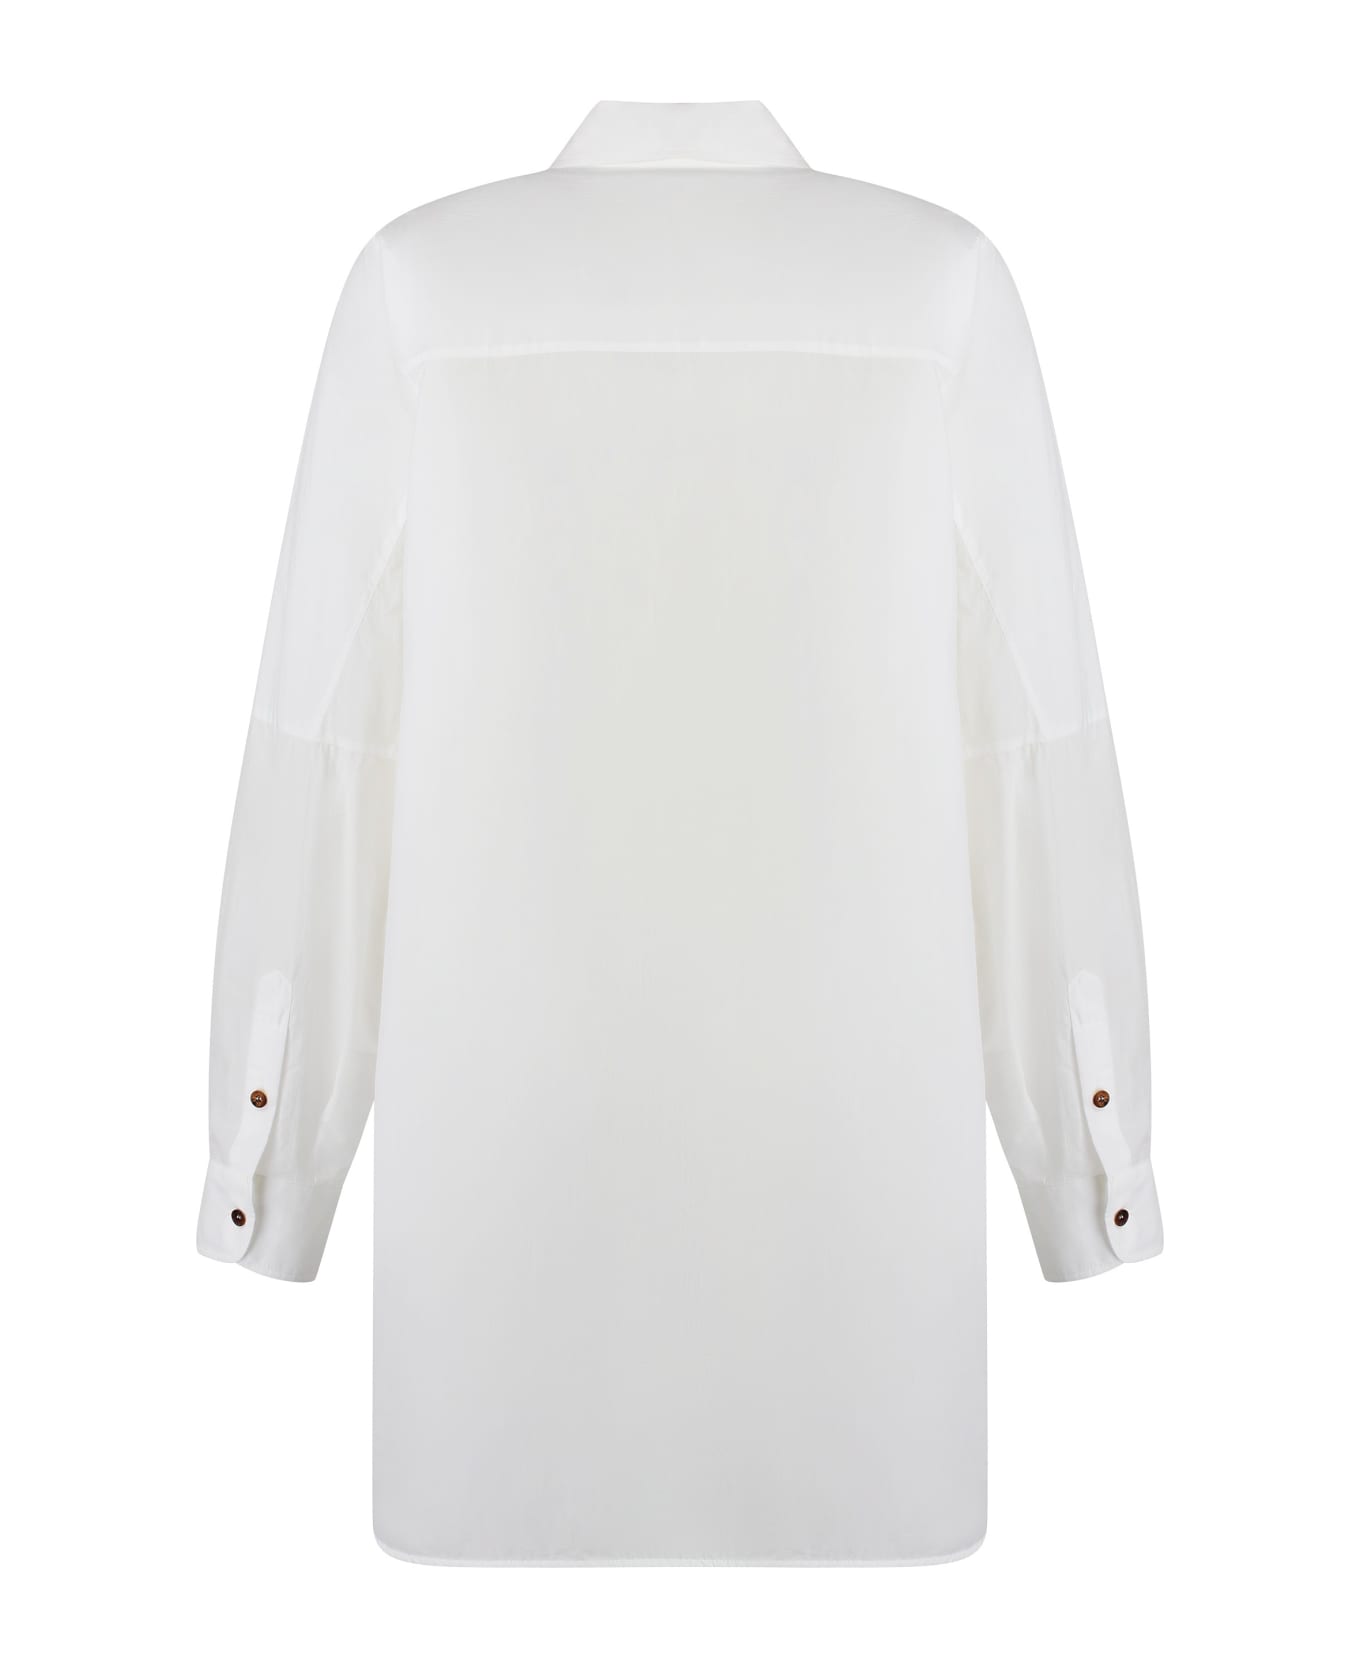 Philosophy di Lorenzo Serafini Cotton Blend Shirt - White シャツ